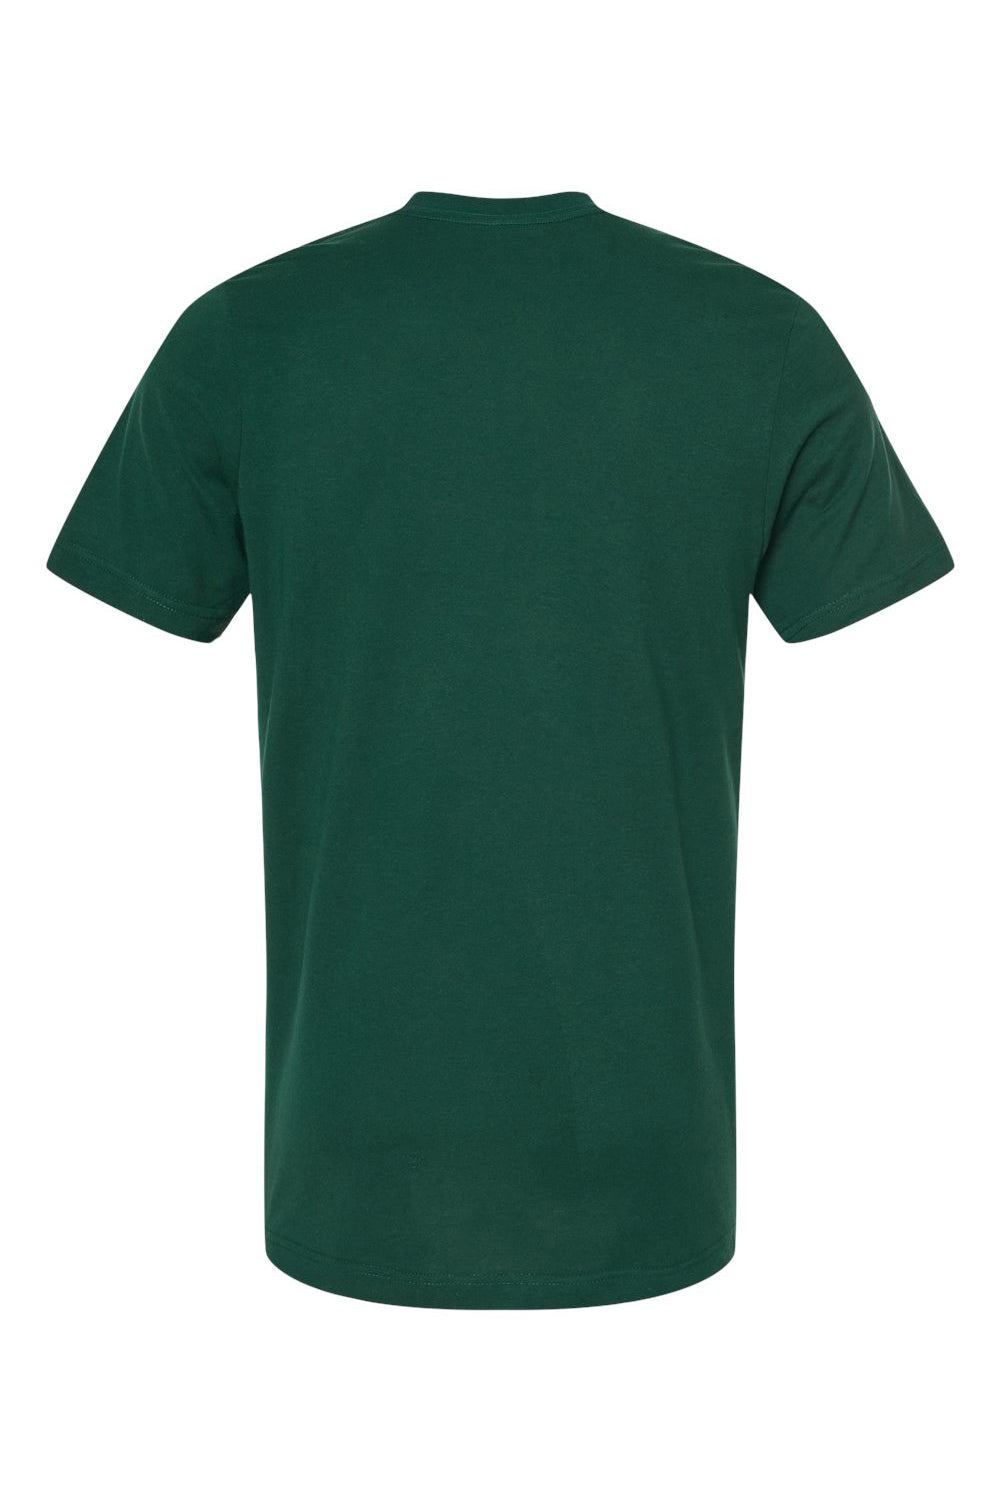 Tultex 502 Mens Premium Short Sleeve Crewneck T-Shirt Forest Green Flat Back